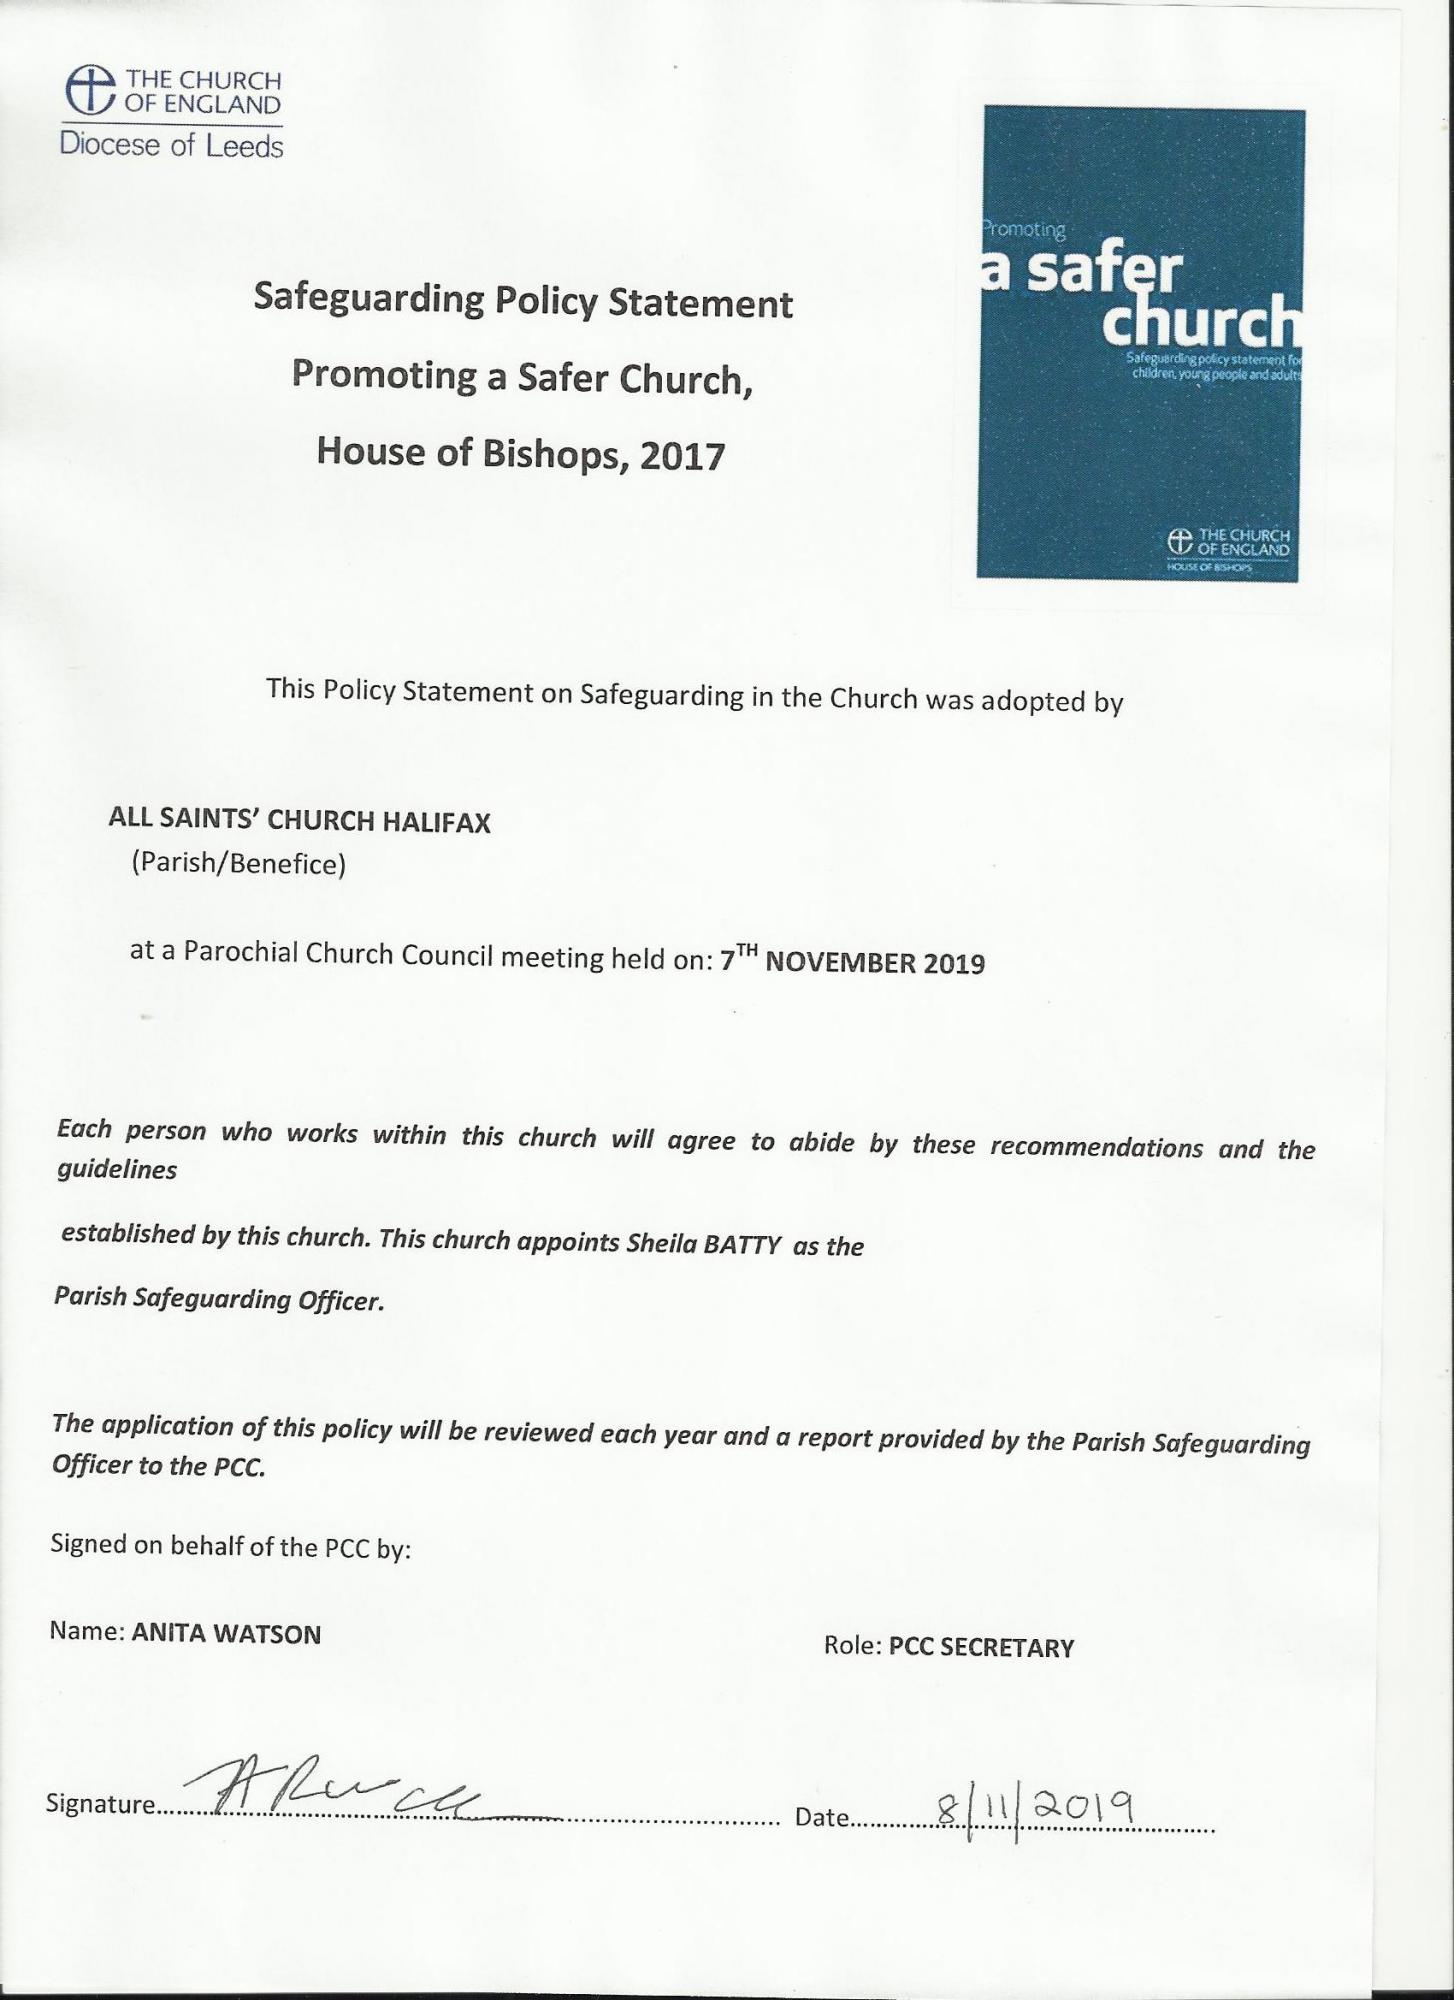 Safeguarding Notice Documents All Saints #39 Church Halifax